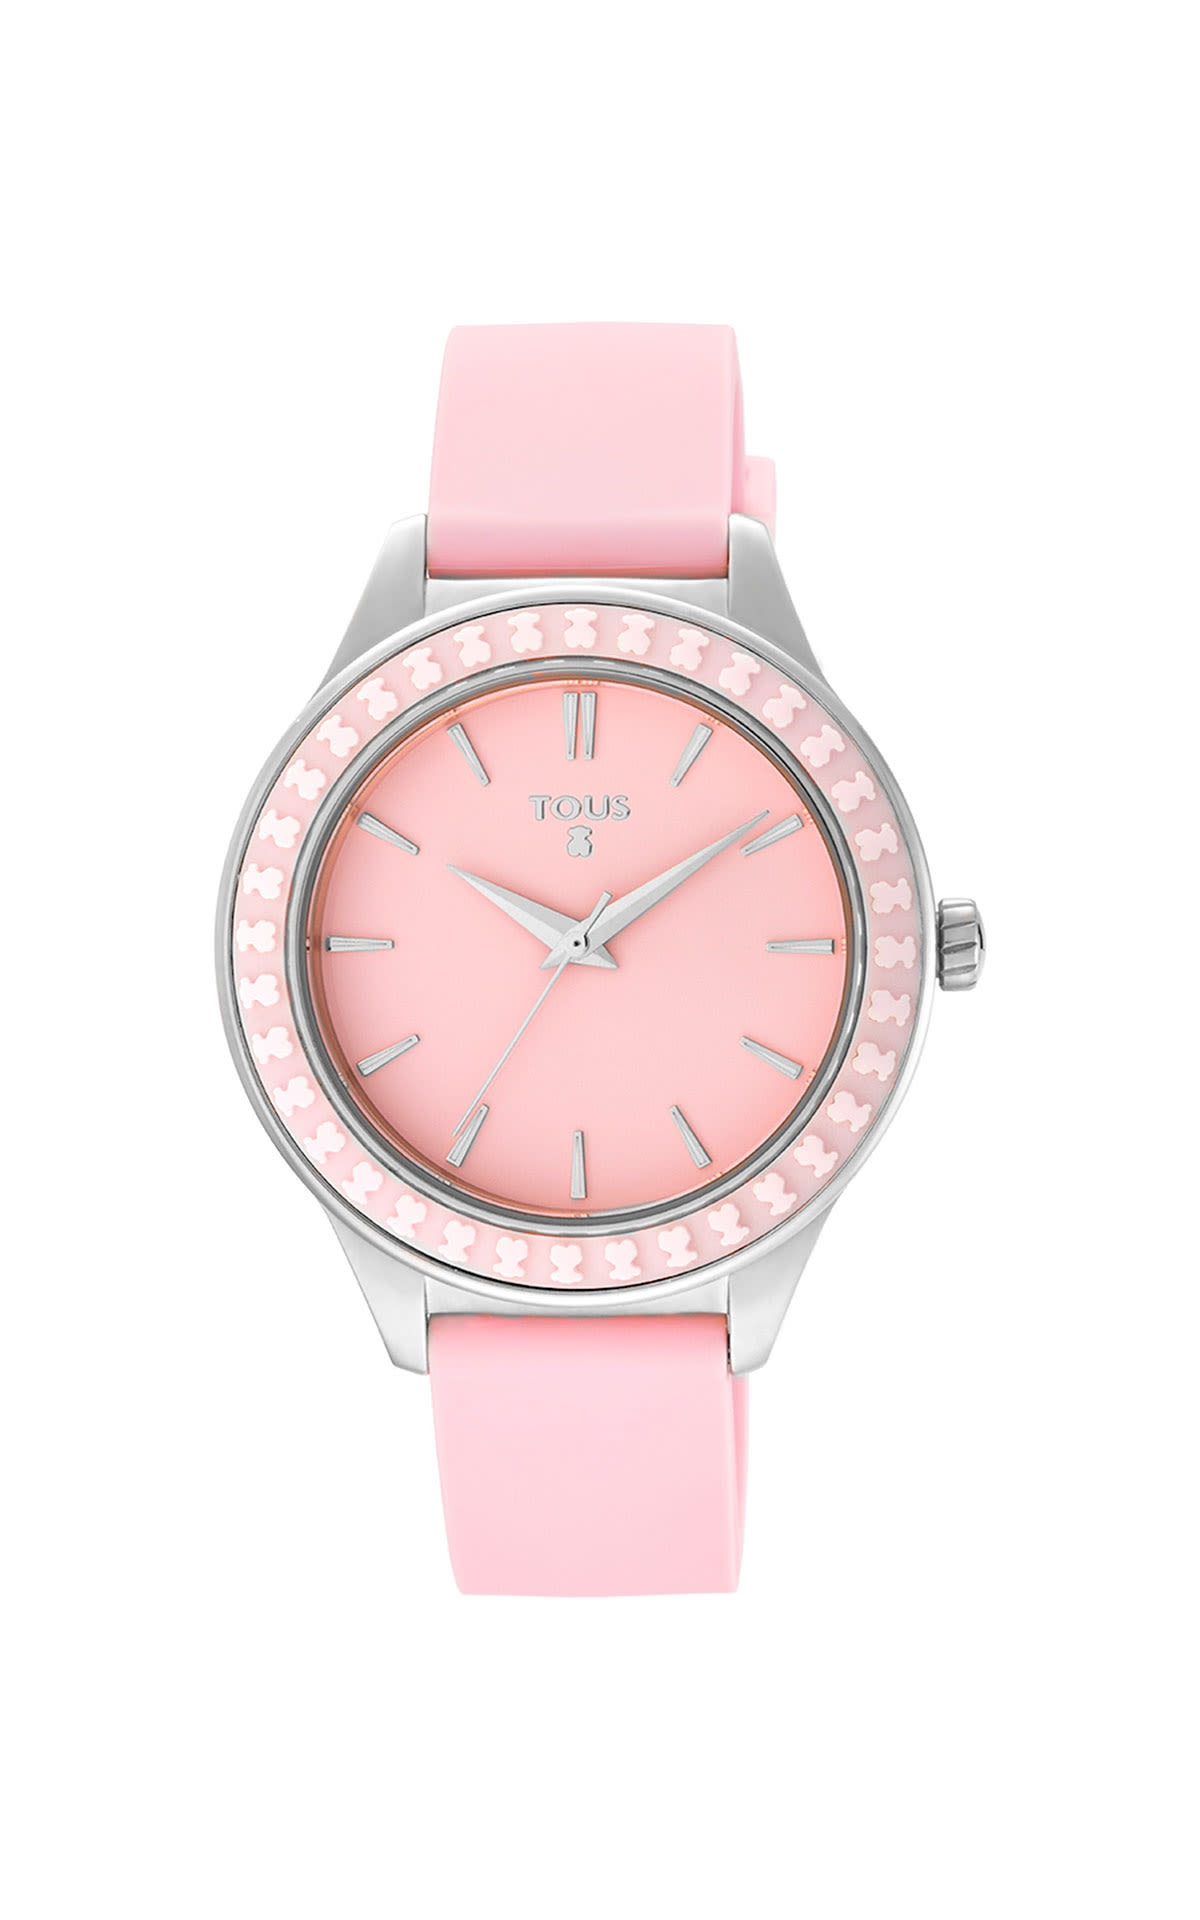 Tous pink watch